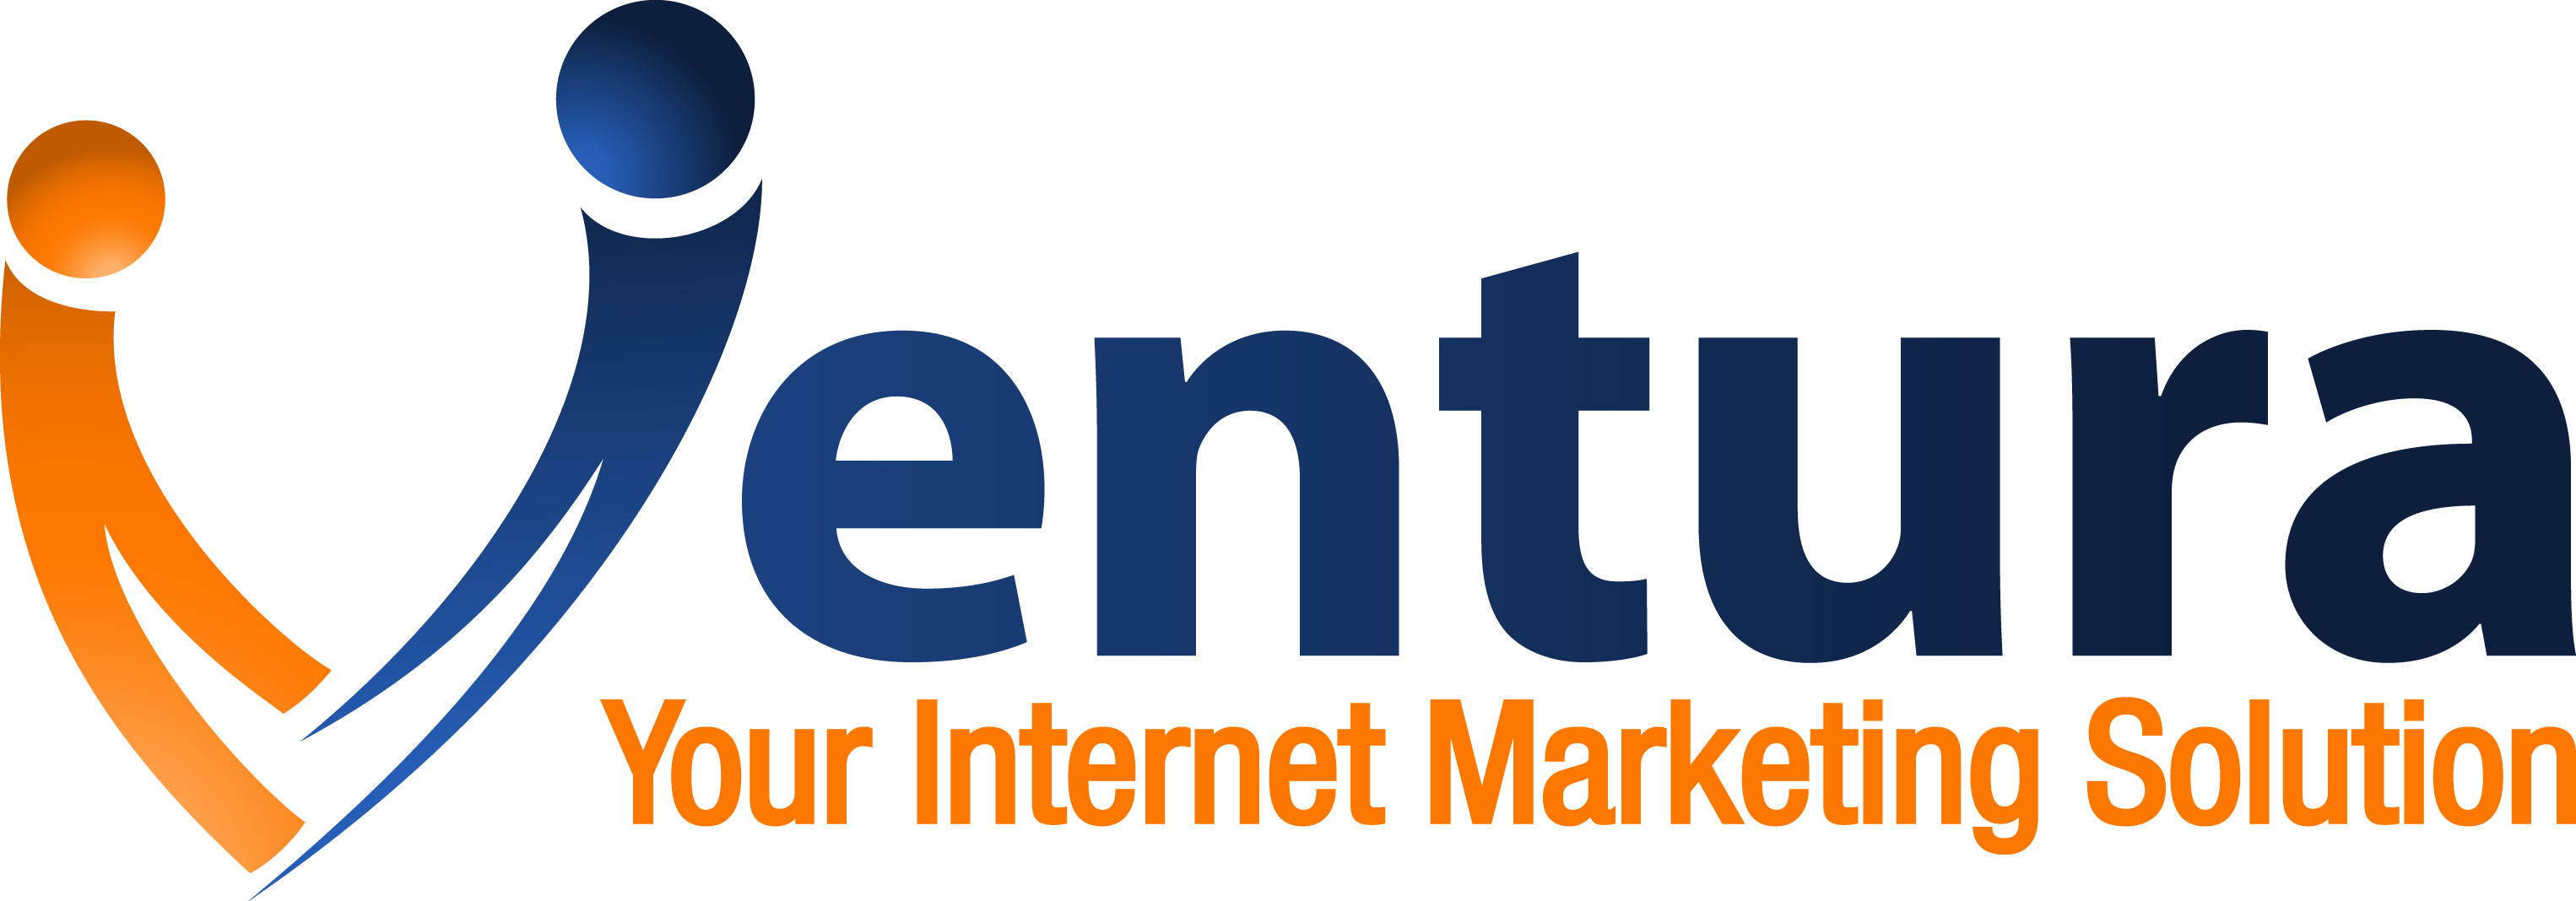 Ventura Online Business